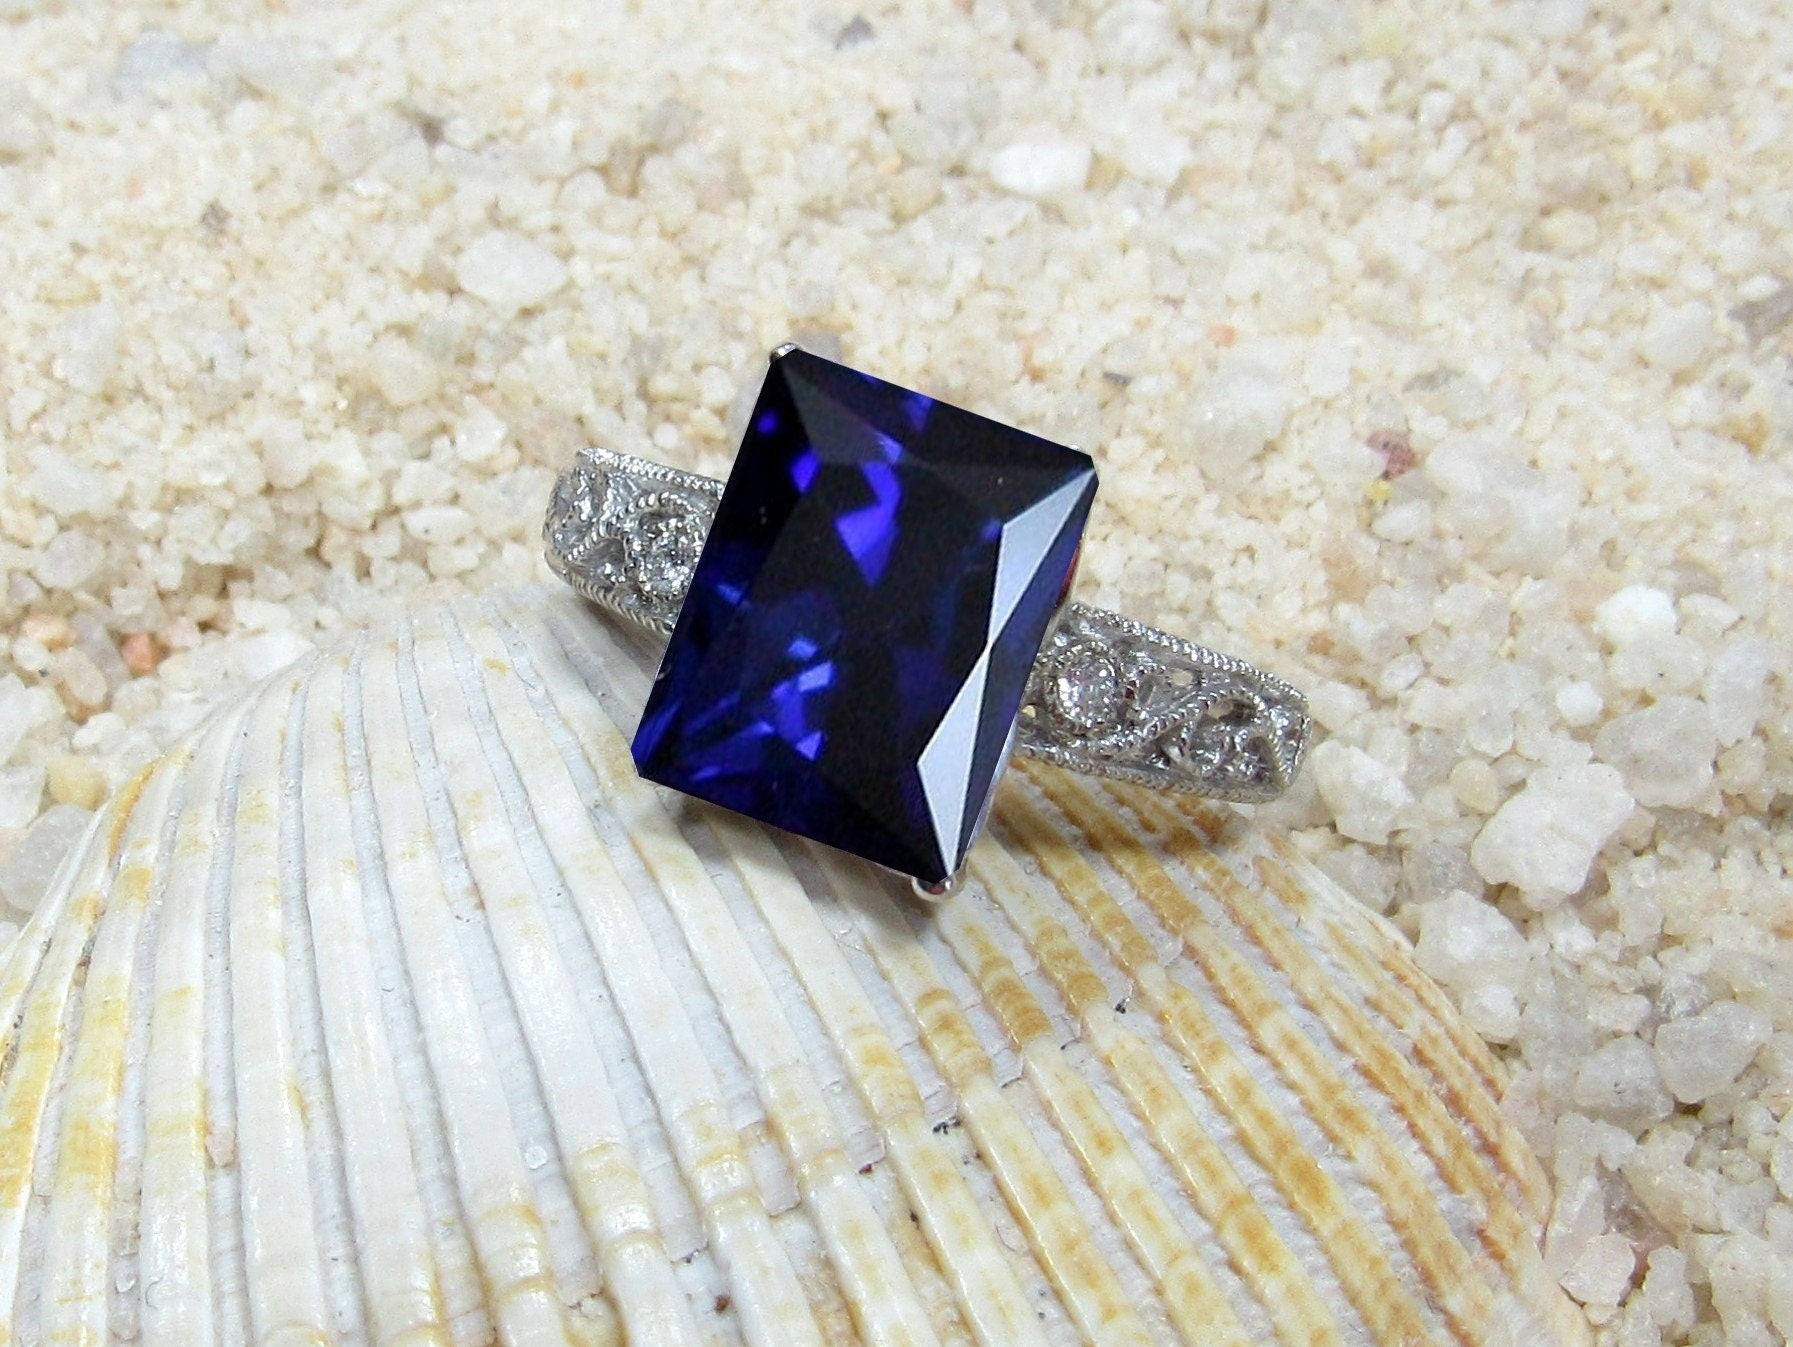 Blue Sapphire & Diamonds Engagement Ring, Diamond Shank, Vintage Ring, Filigree Ring, Milgrain Ring, Polymnia, 4ct, 10x8mm, Birthstone BellaMoreDesign.com